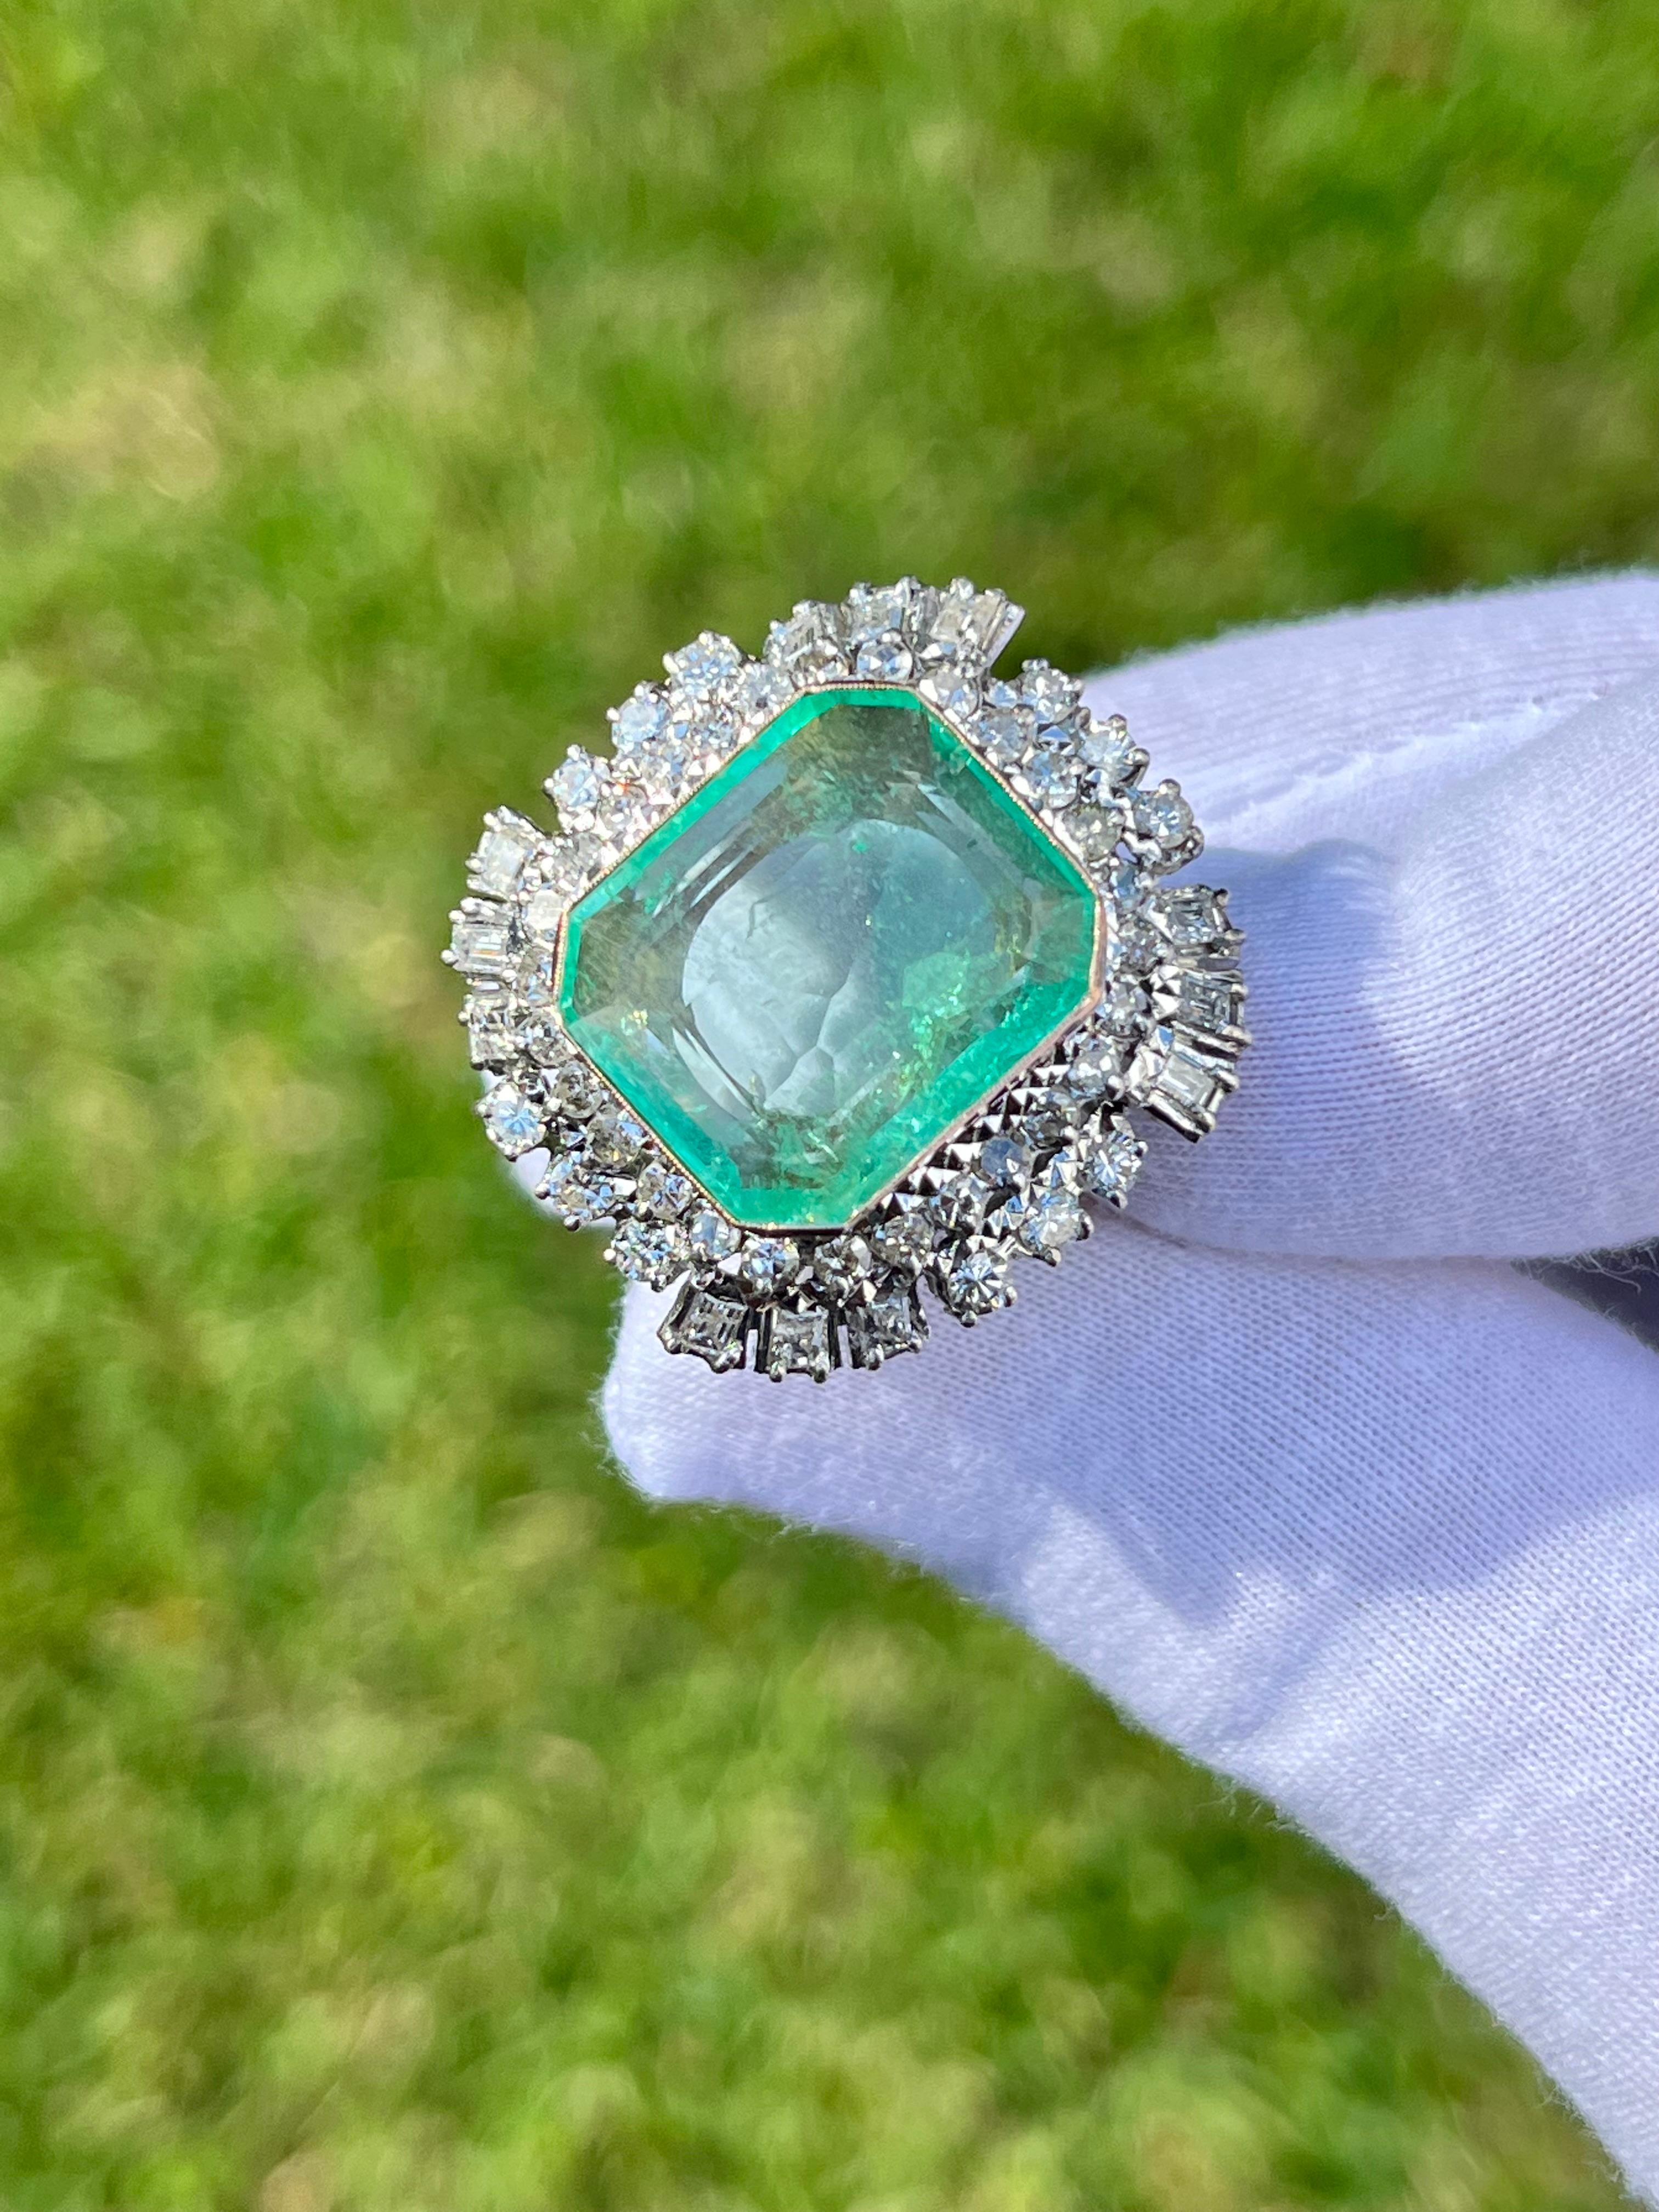 12 carat emerald ring